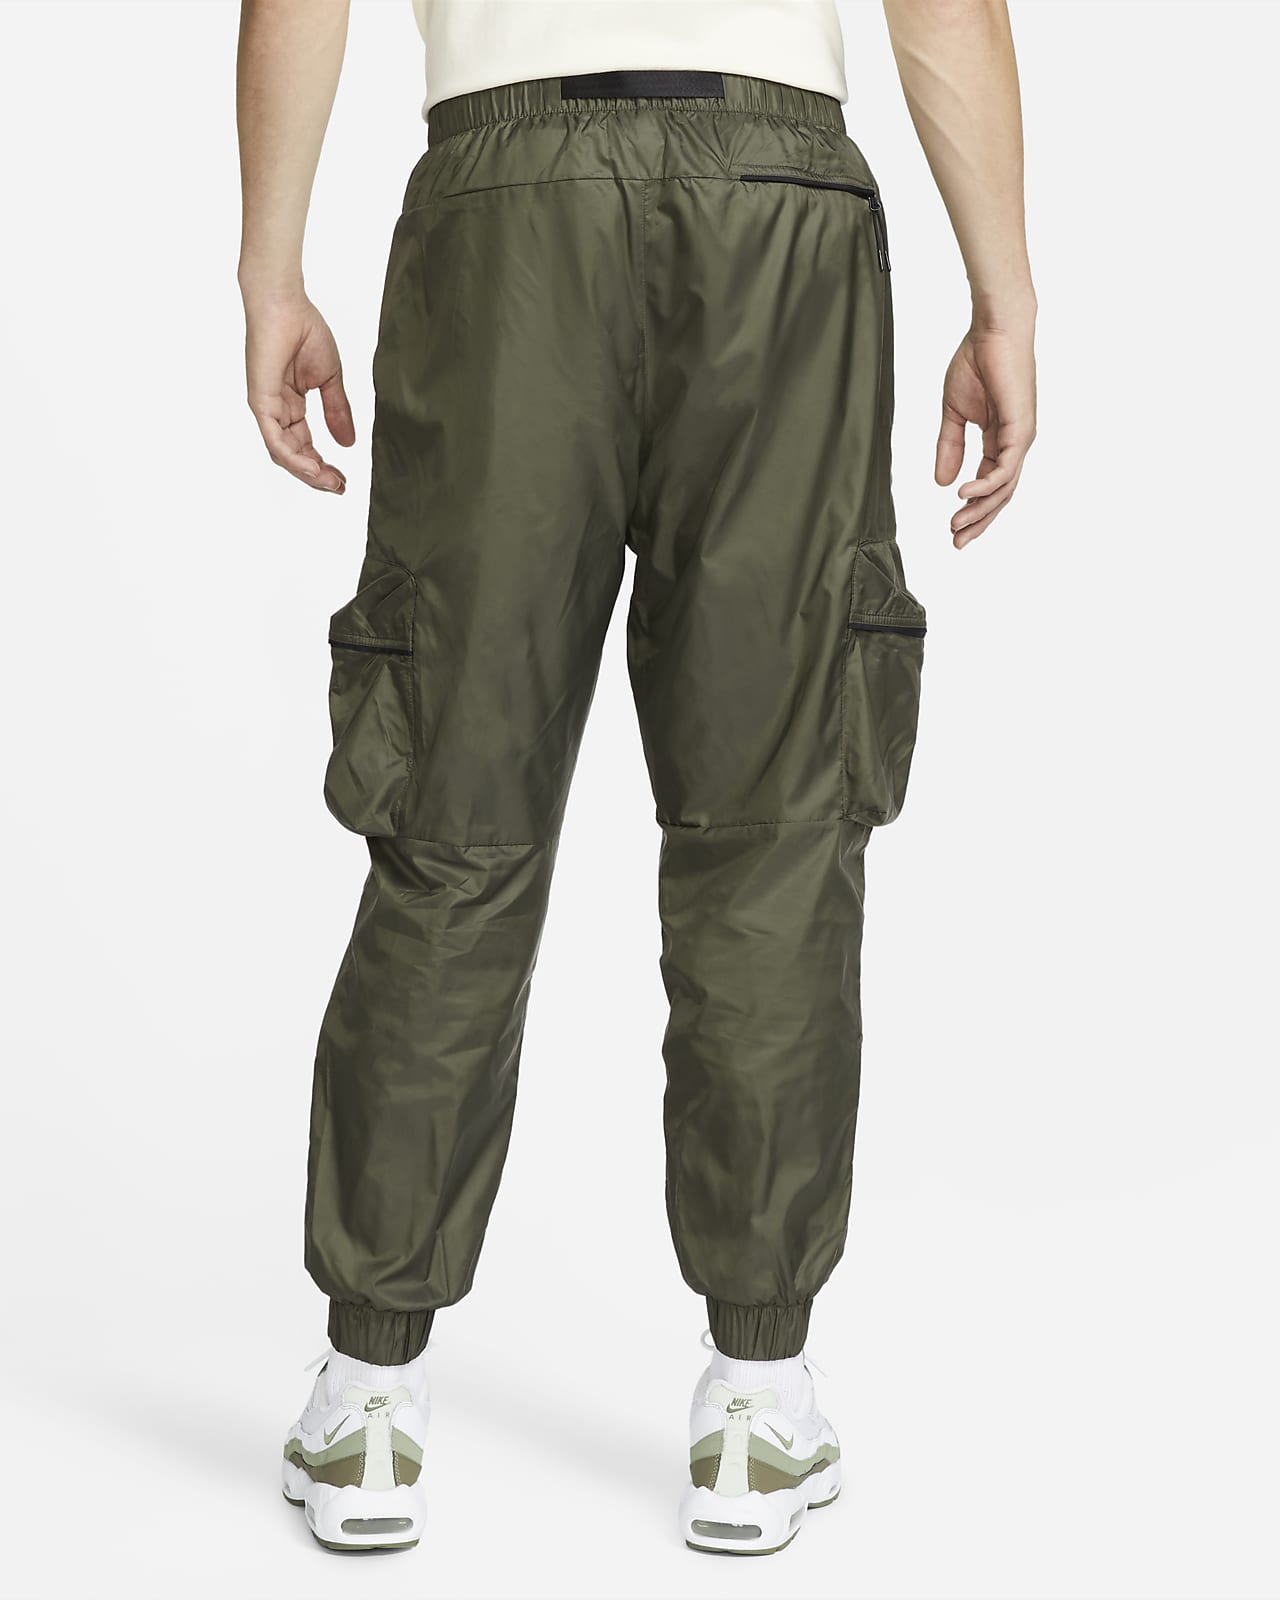 Nike Tech Men's Lined Woven Pants.